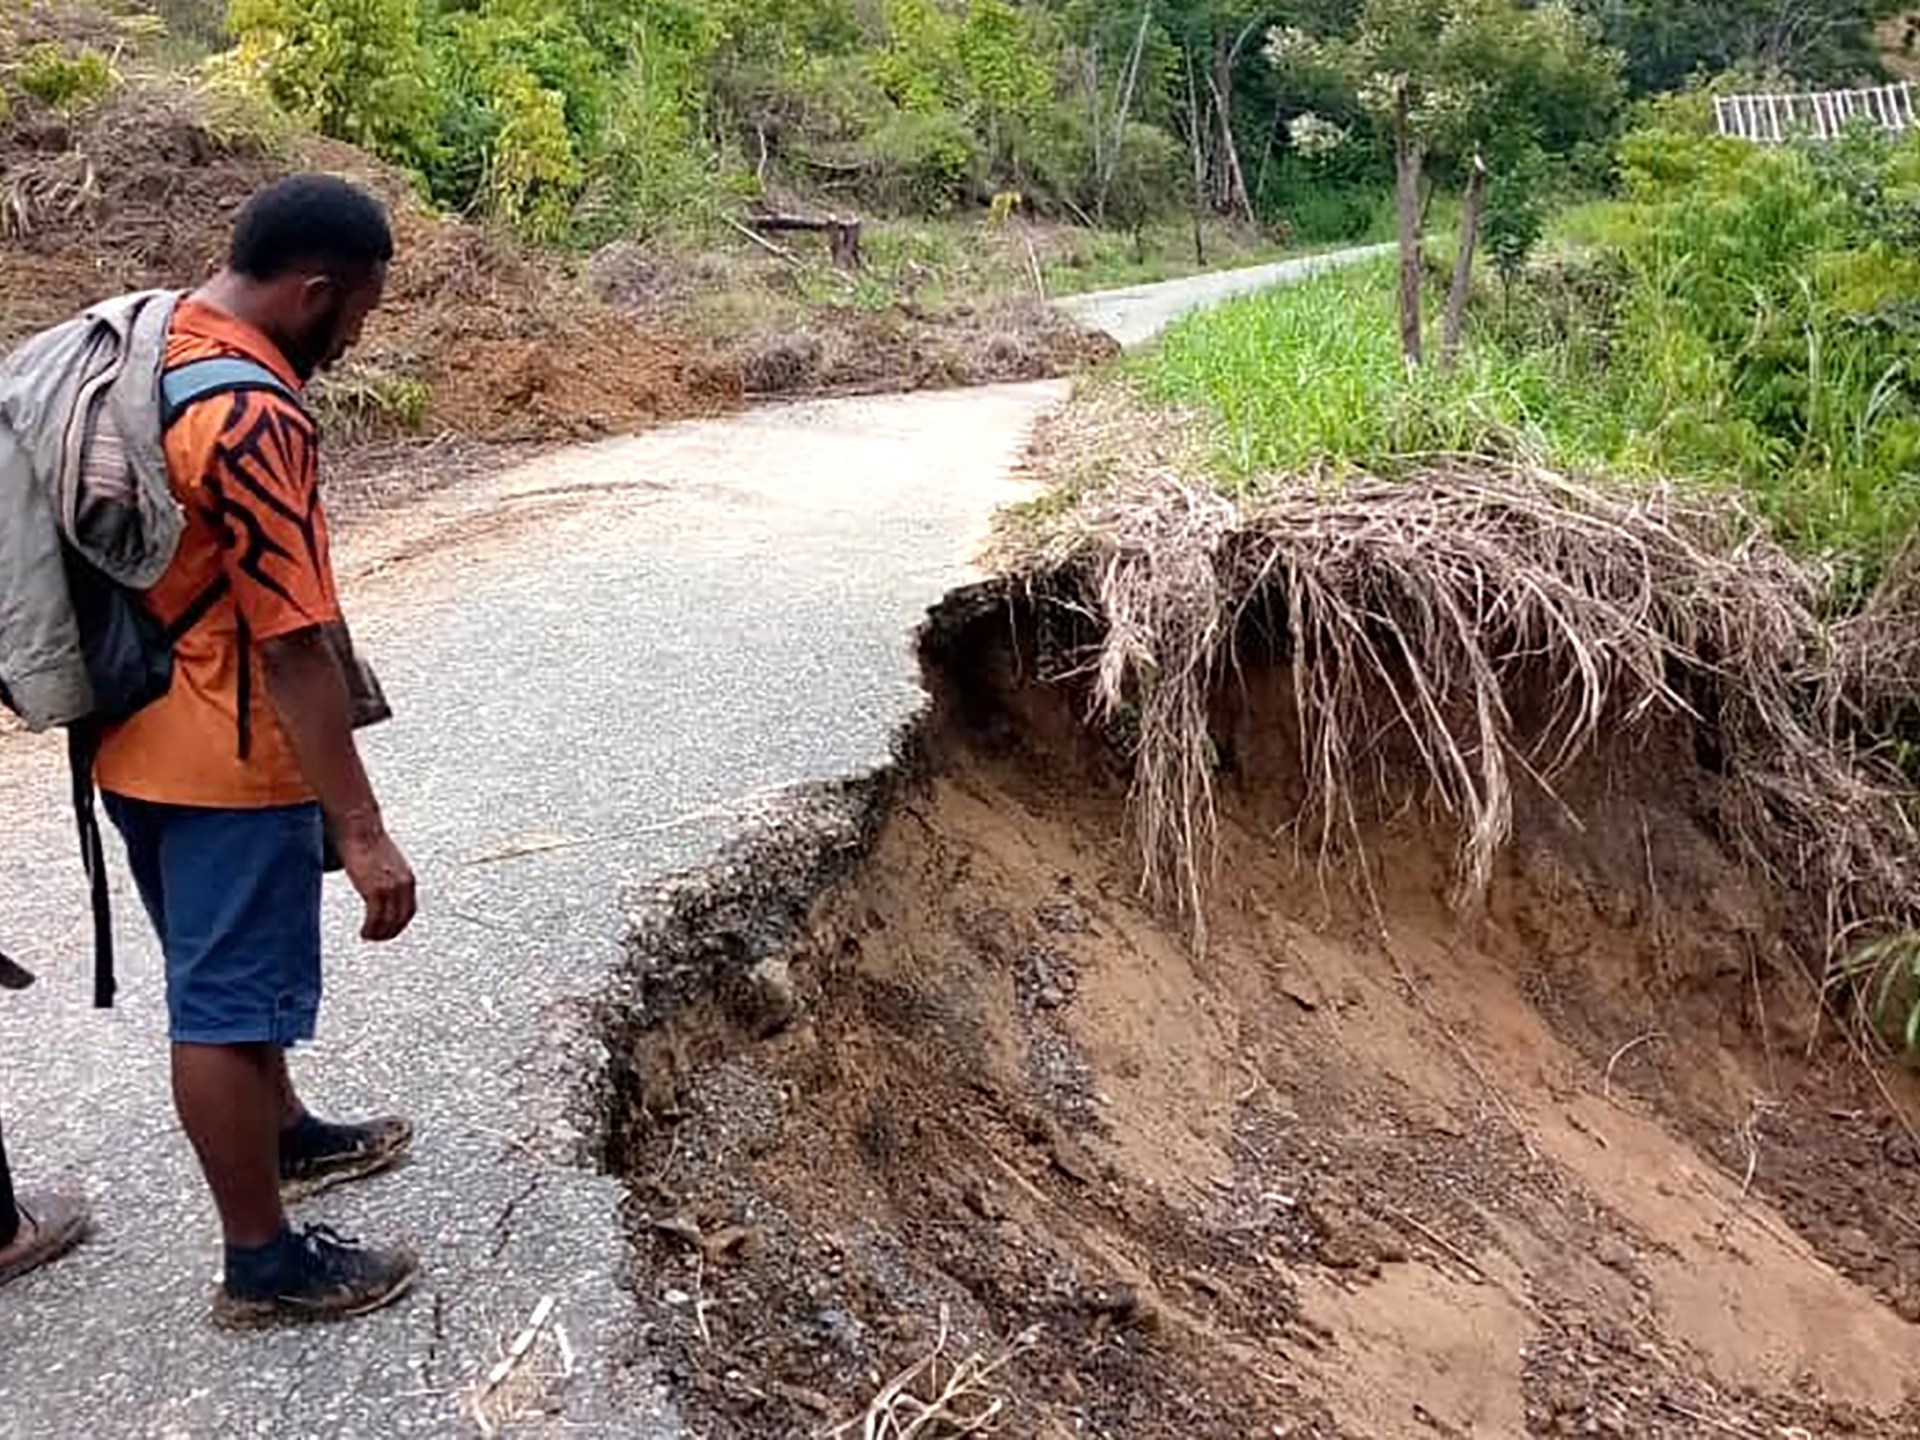 Papua New Guinea floods, landslides leave at least 23 dead | Floods News